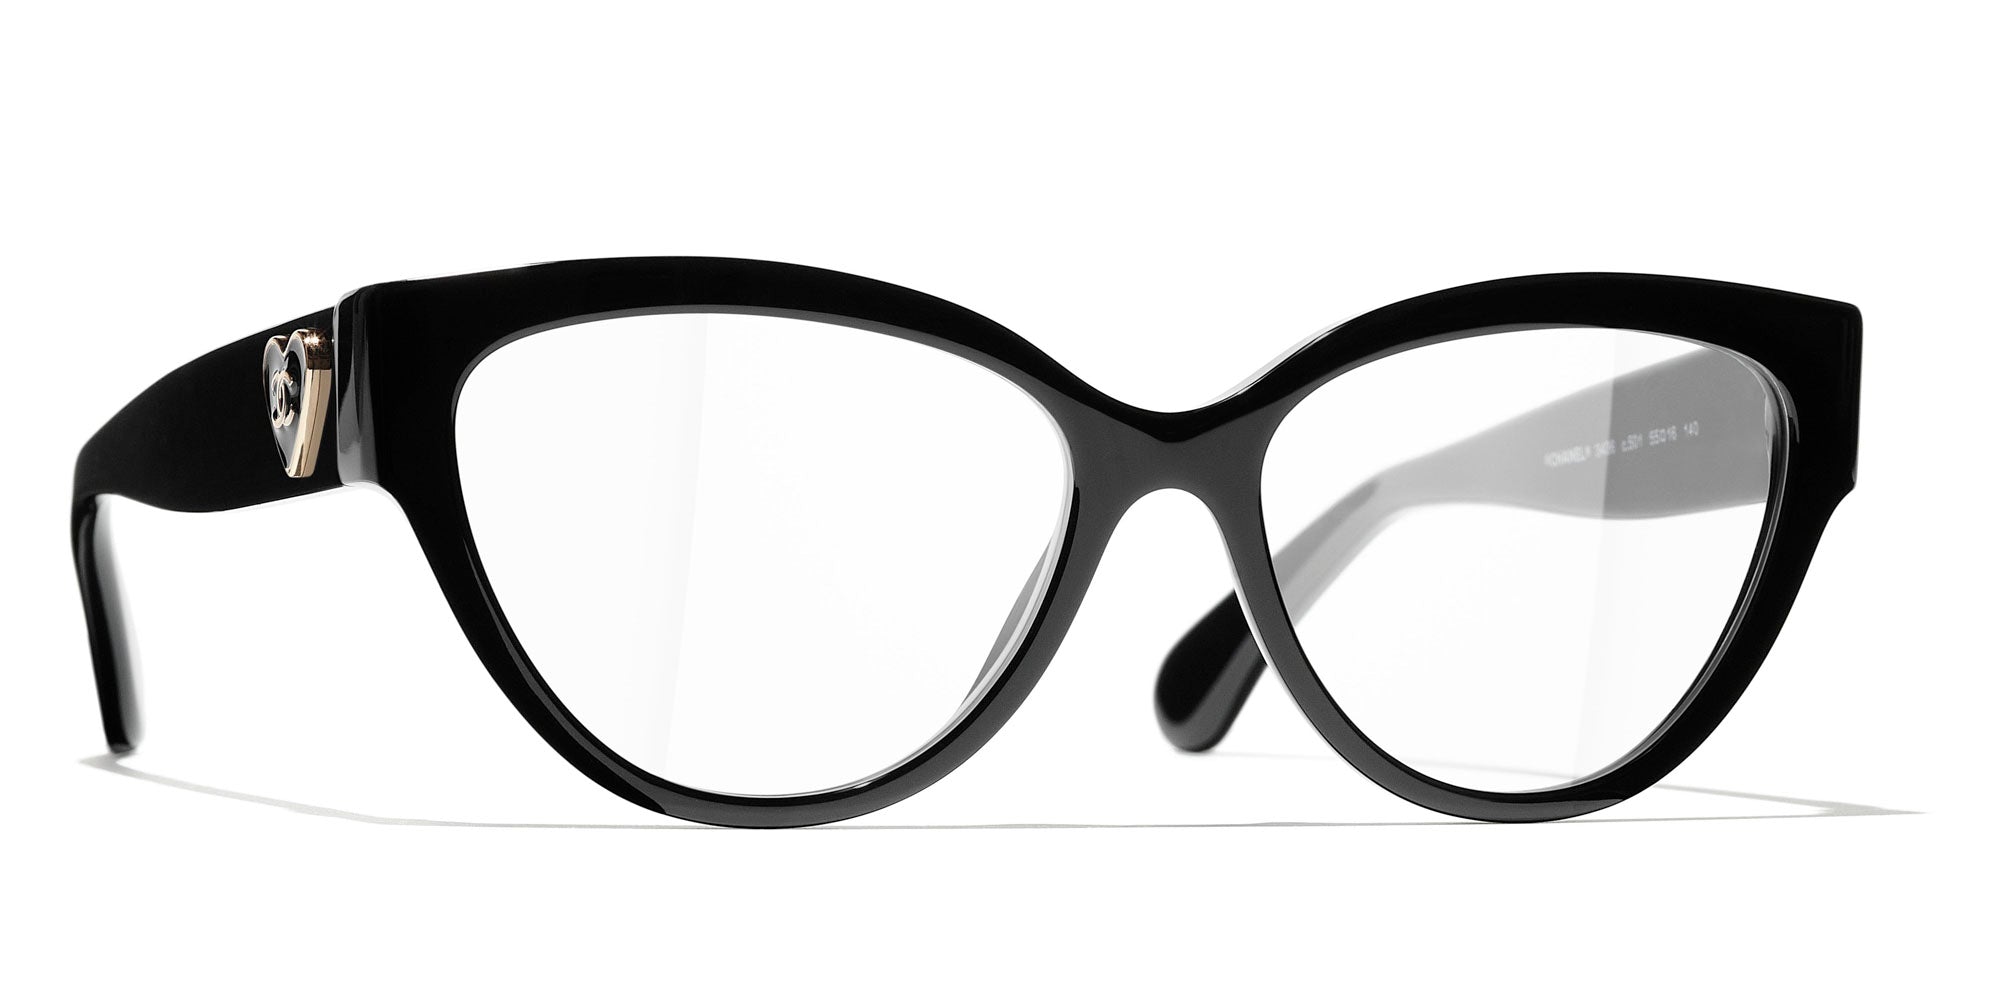 CHANEL 3436 Cat Eye Acetate Glasses (Women) – F/E – Fashion Eyewear